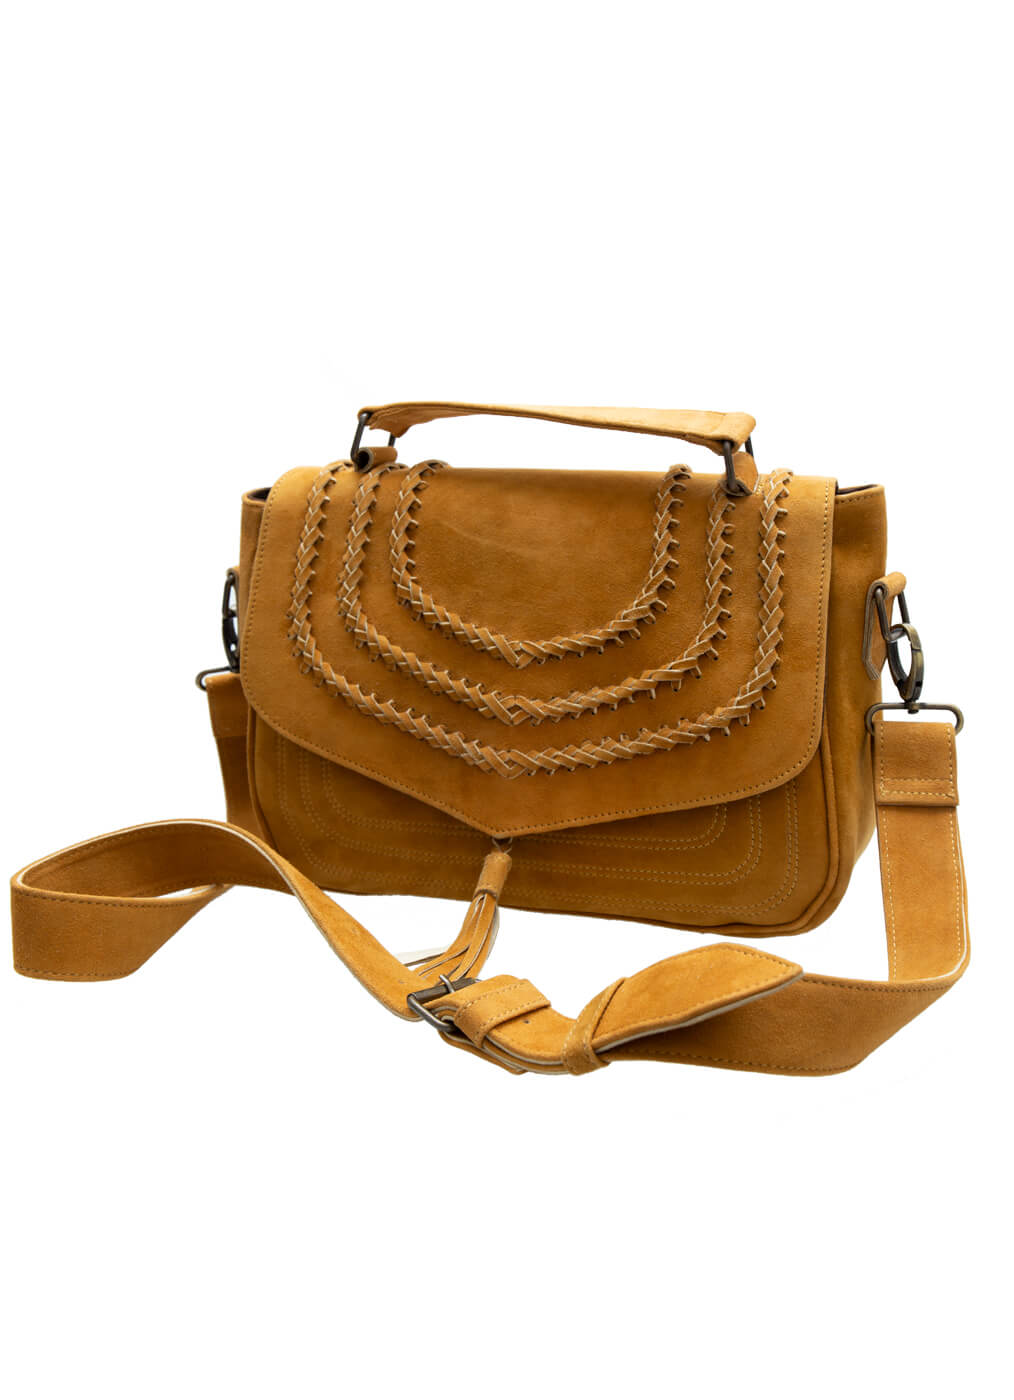 Goat Leather Bag “Just About you”, saffron